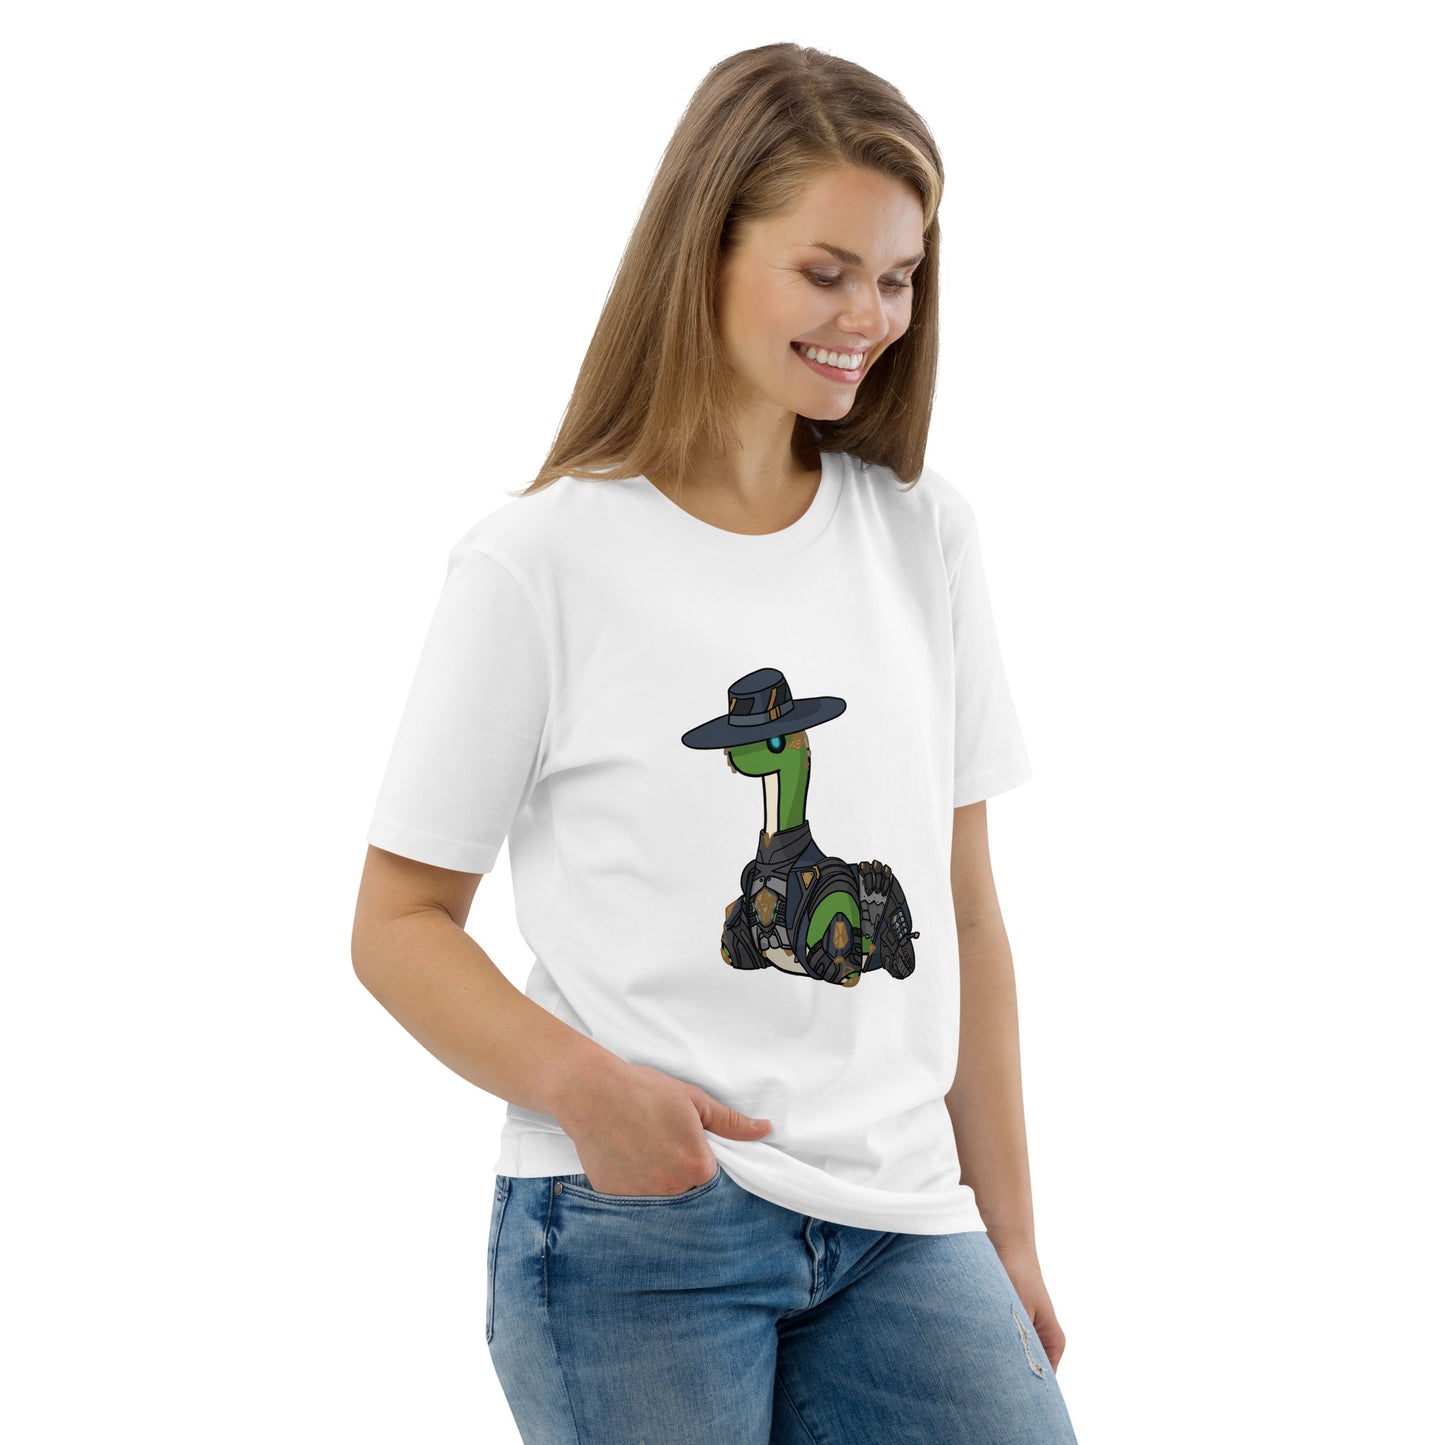 Seer Nessie T-Shirt (Apex Legends)